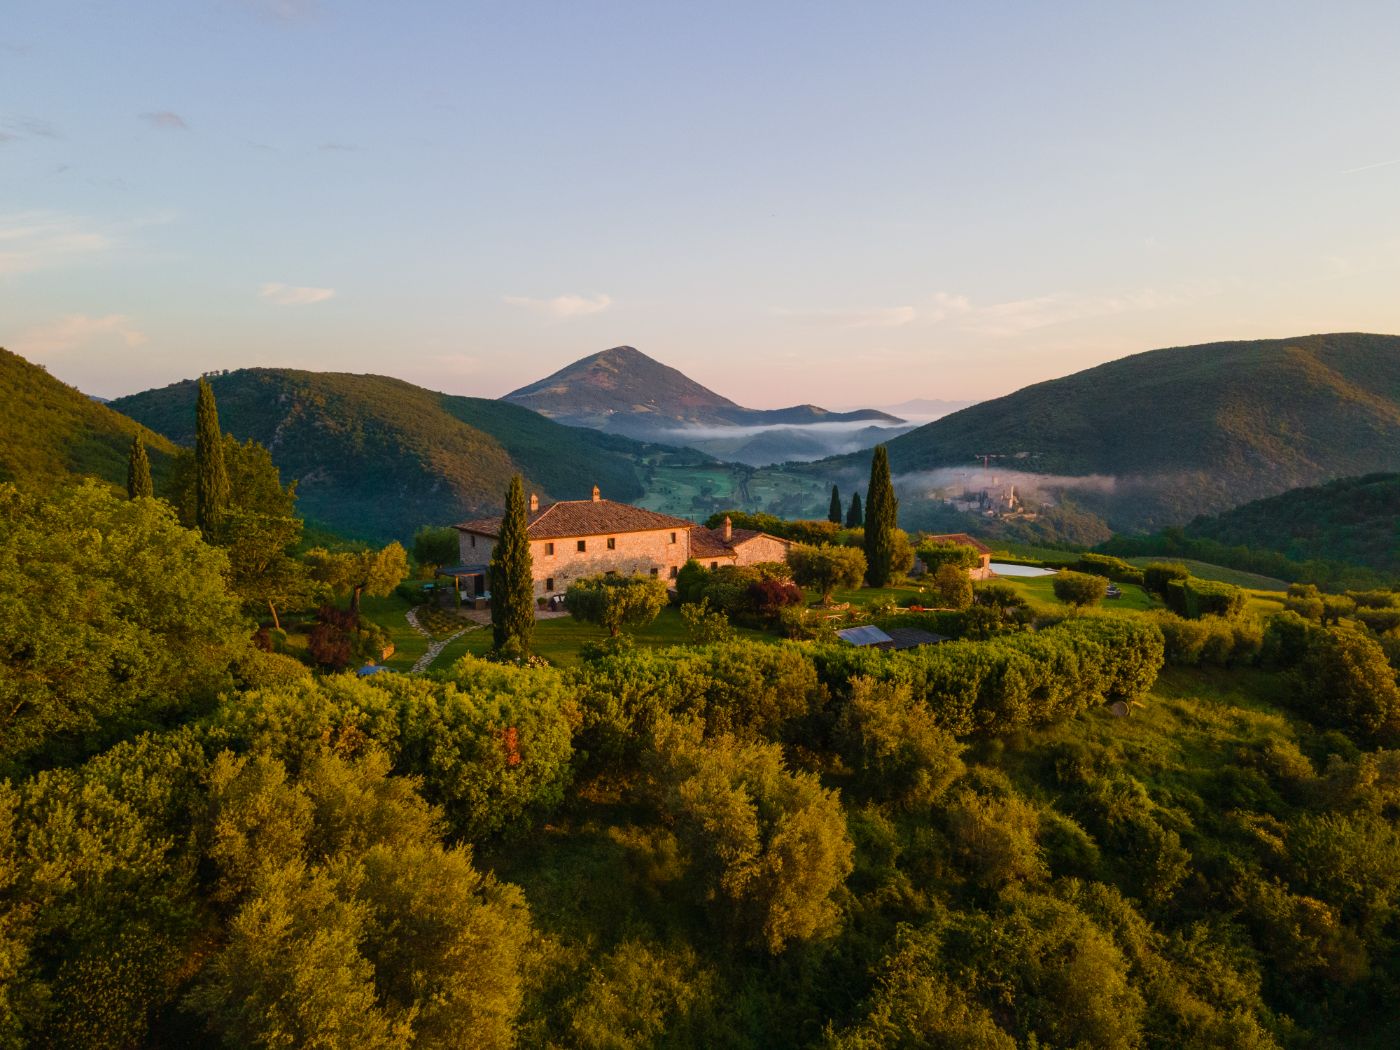 The stunning landscape surrounding Villa Arpeggio.